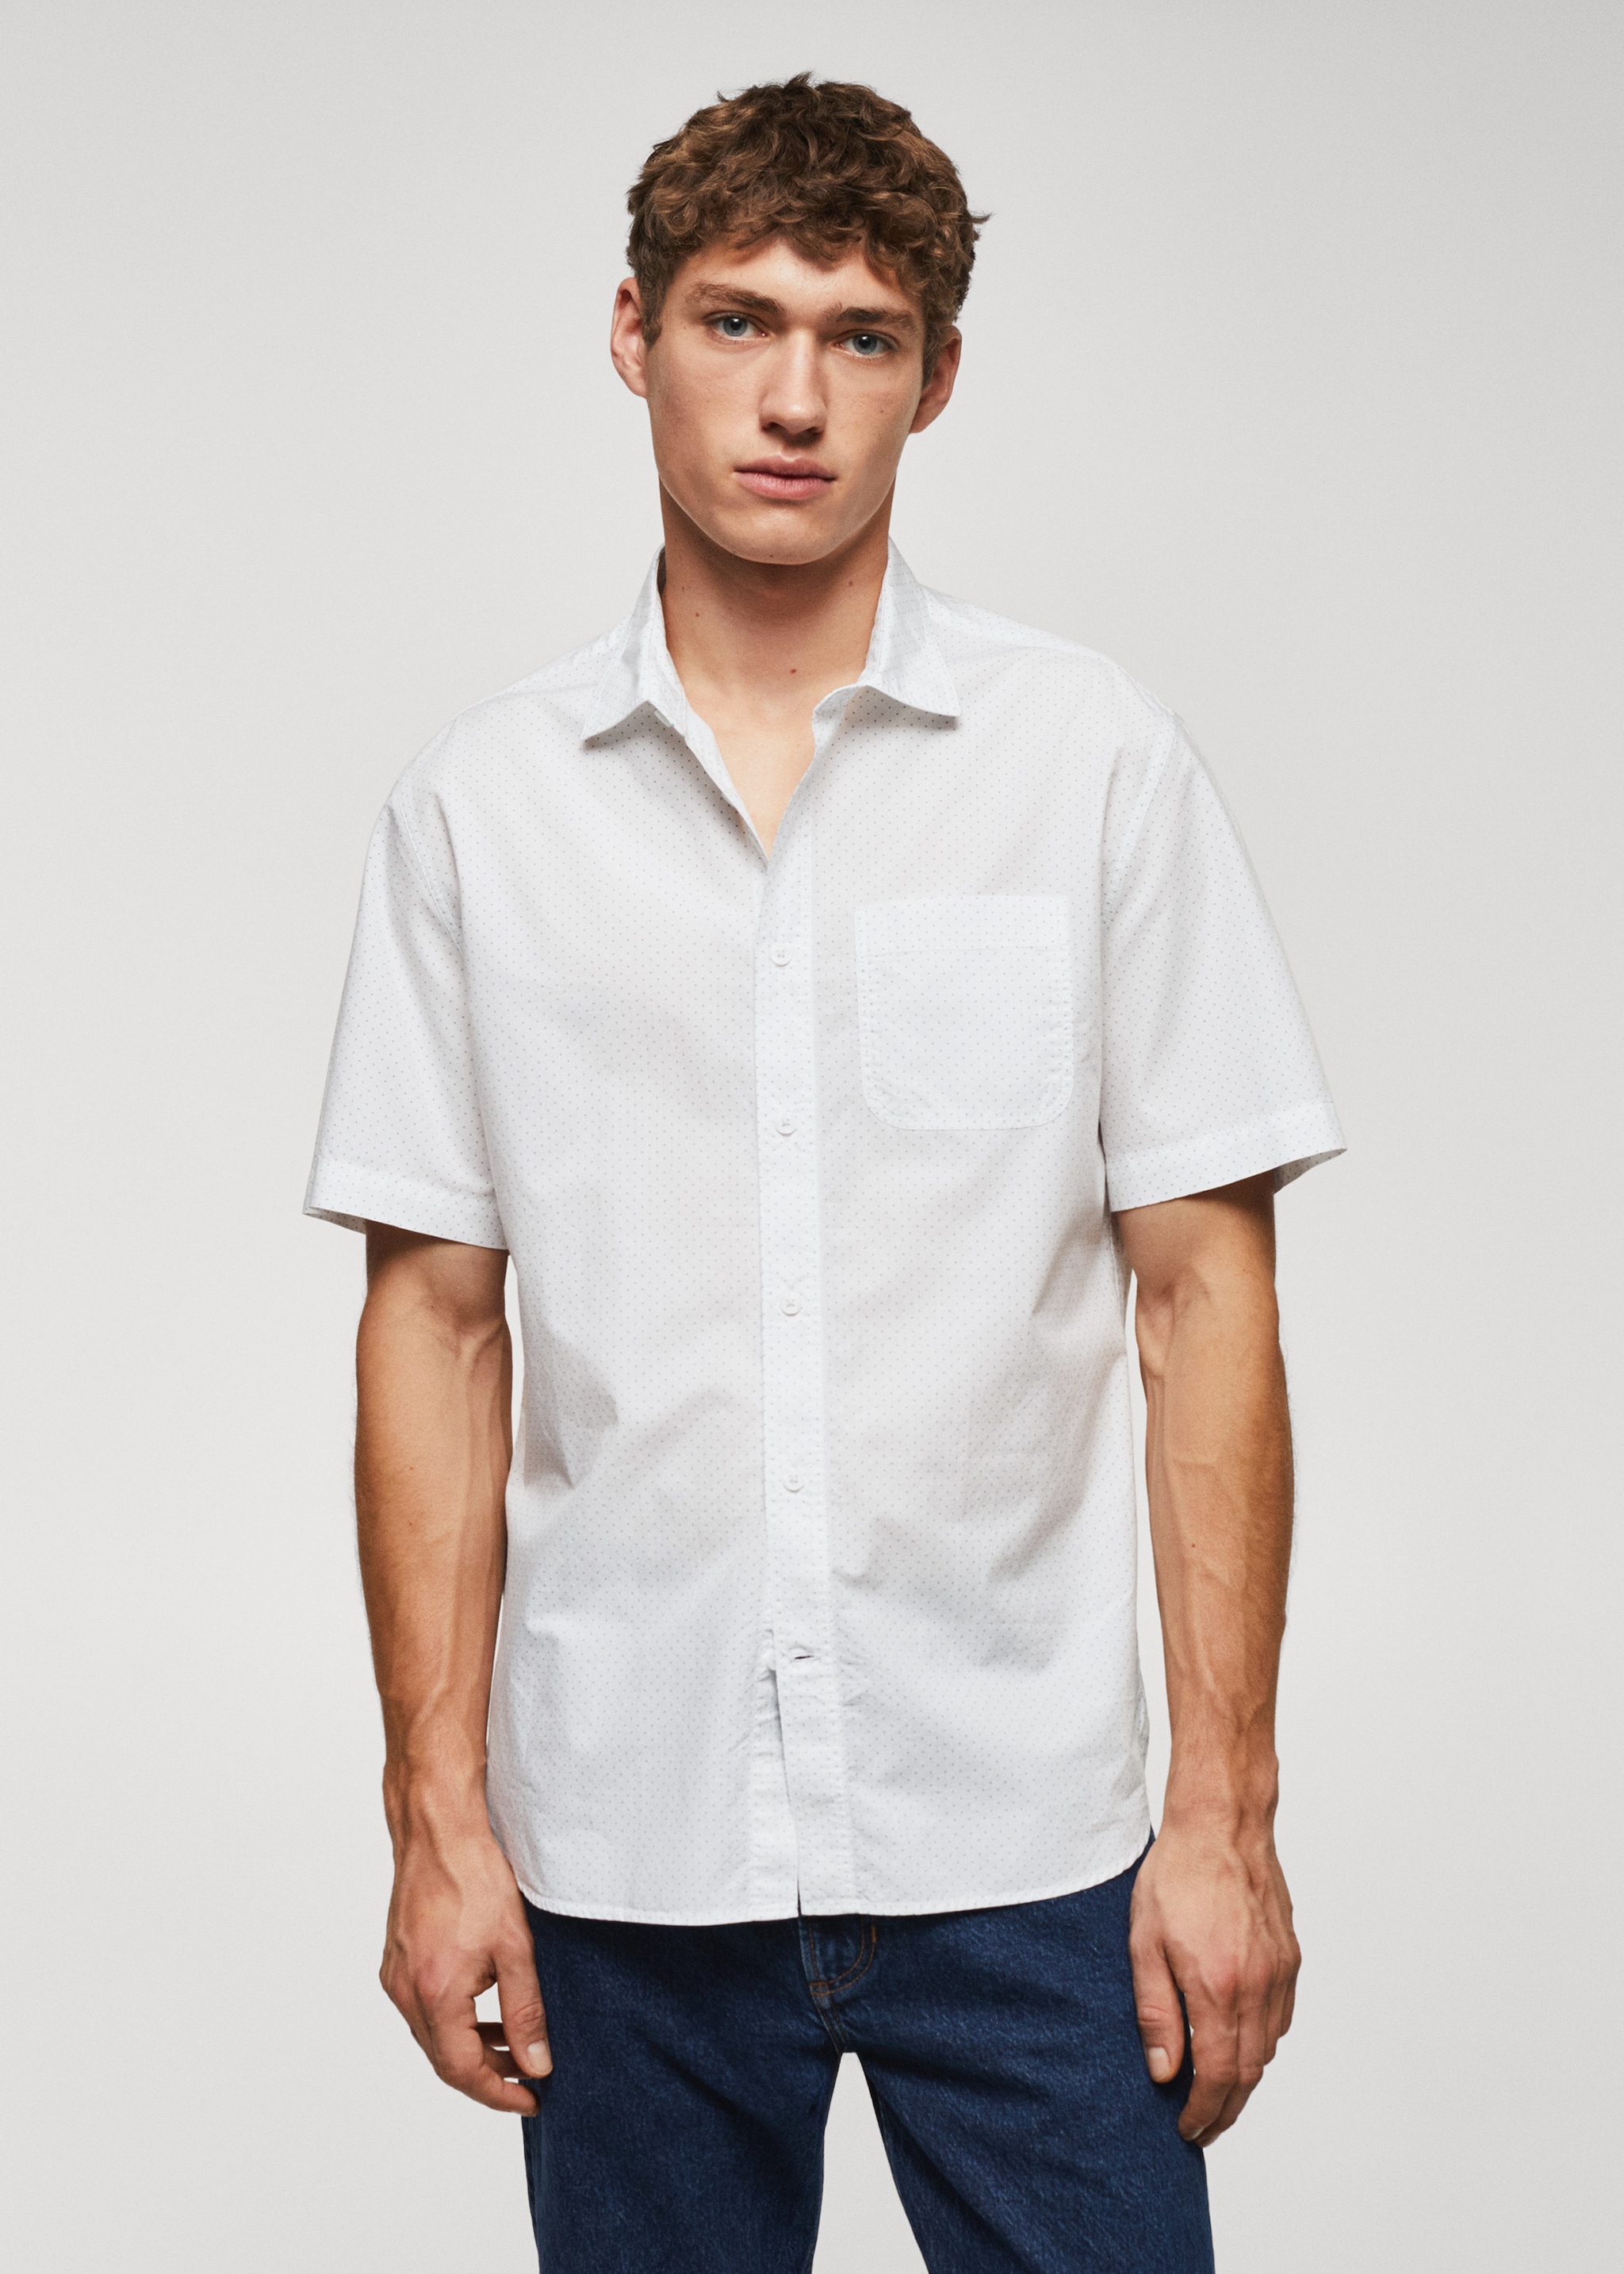 100% cotton short-sleeved mirco-patterned shirt - Medium plane